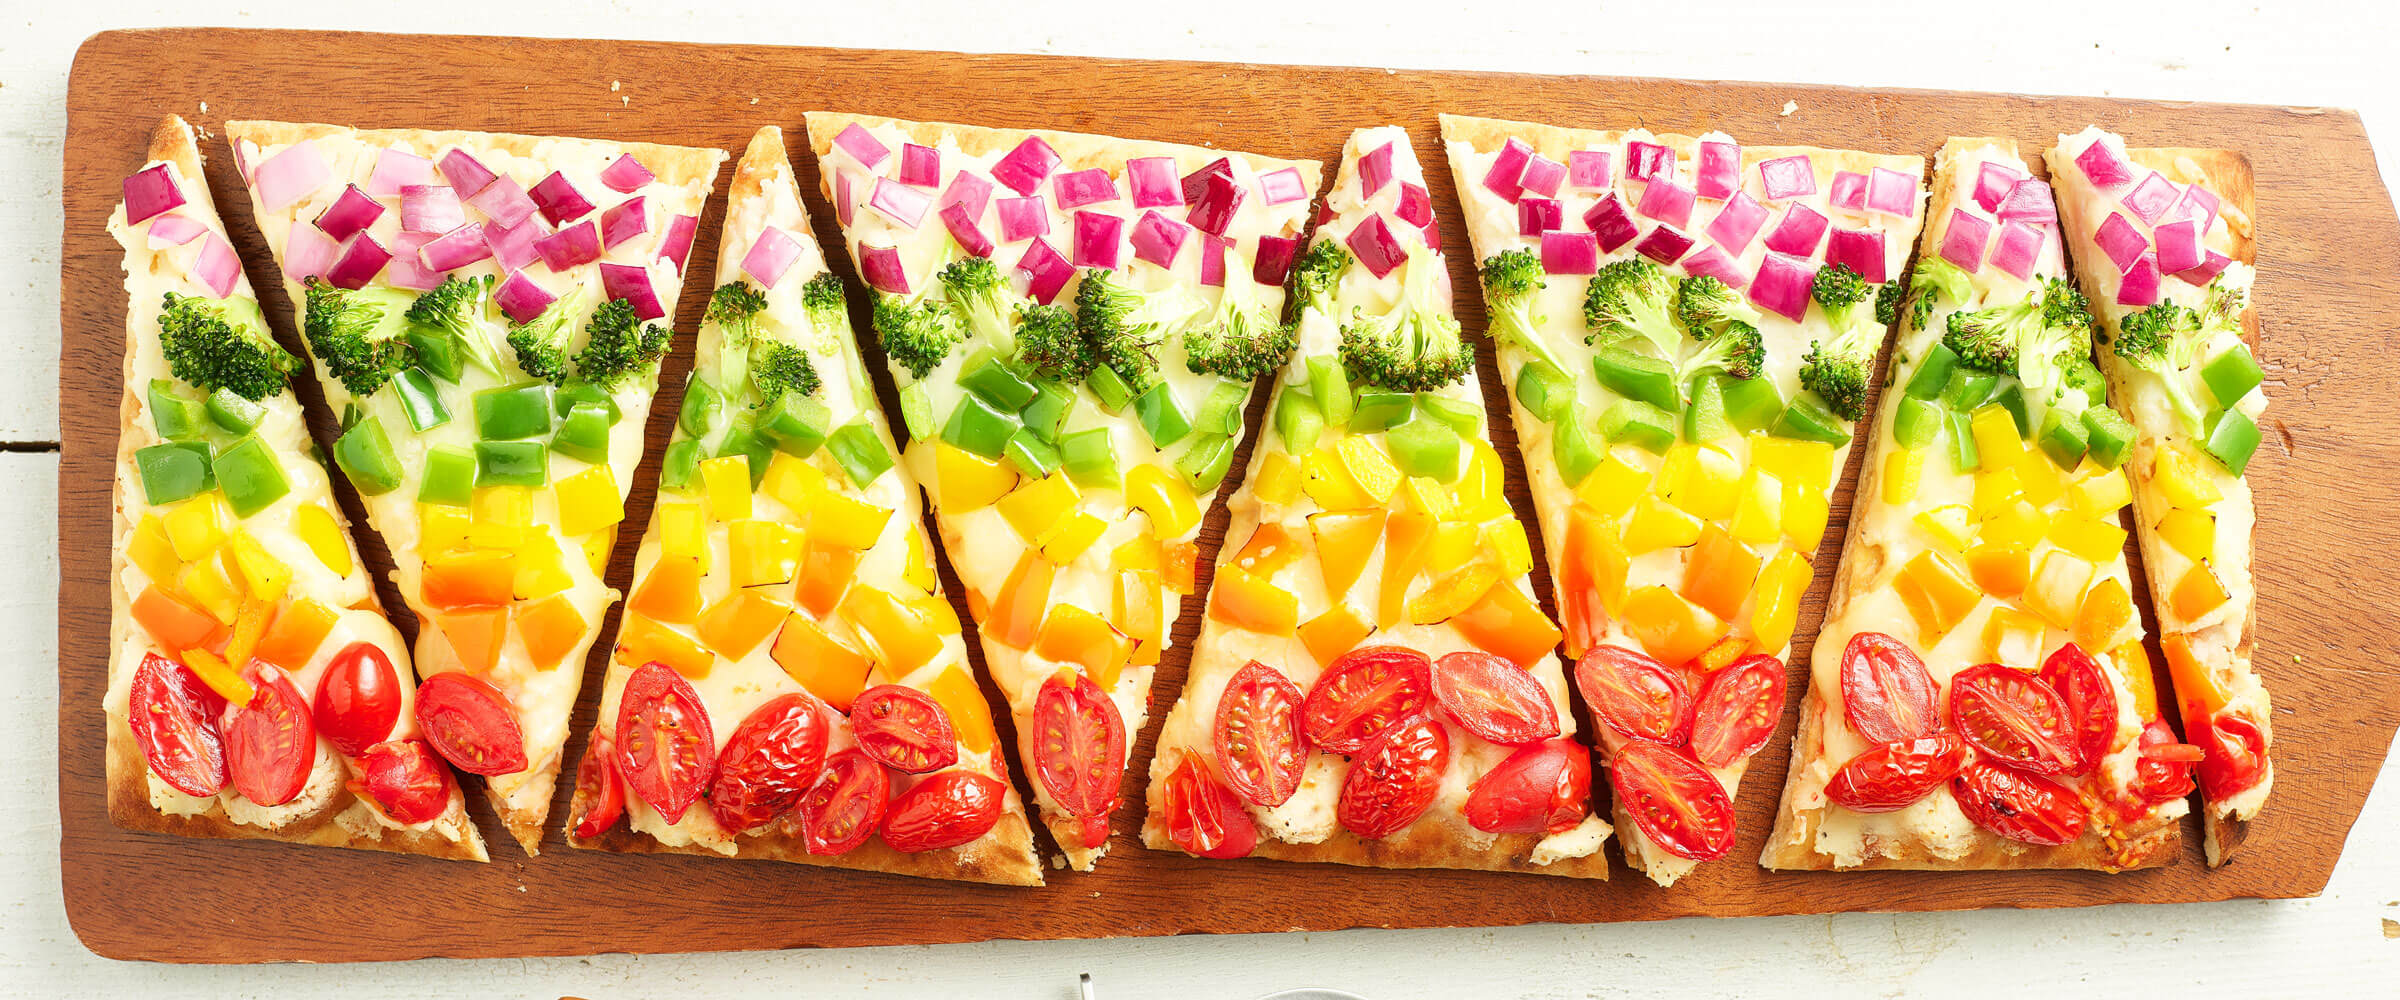 Mashed Potato Rainbow Flatbread Pizza cut into triangles on wood board